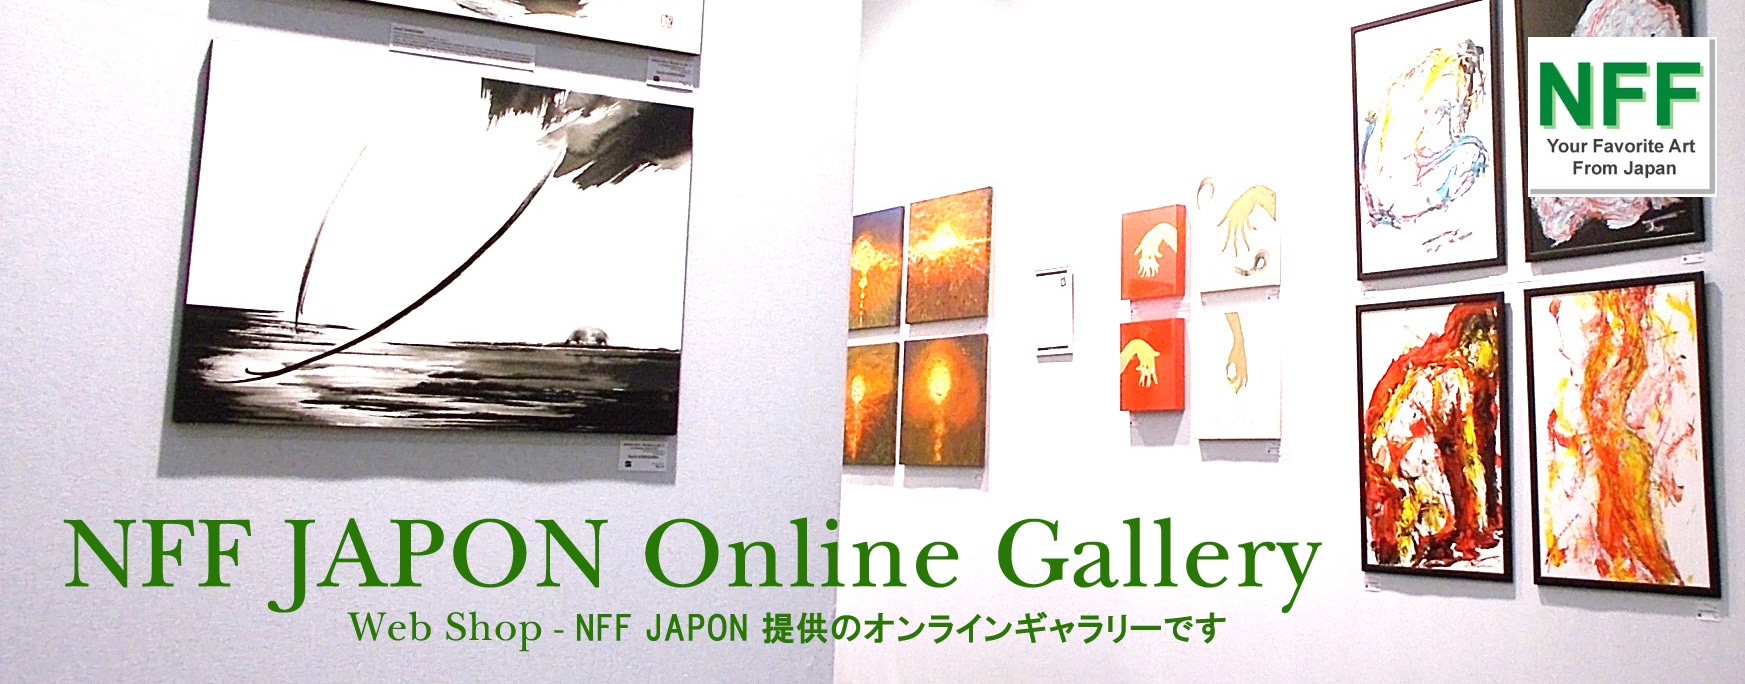 NFF JAPON Online Gallery